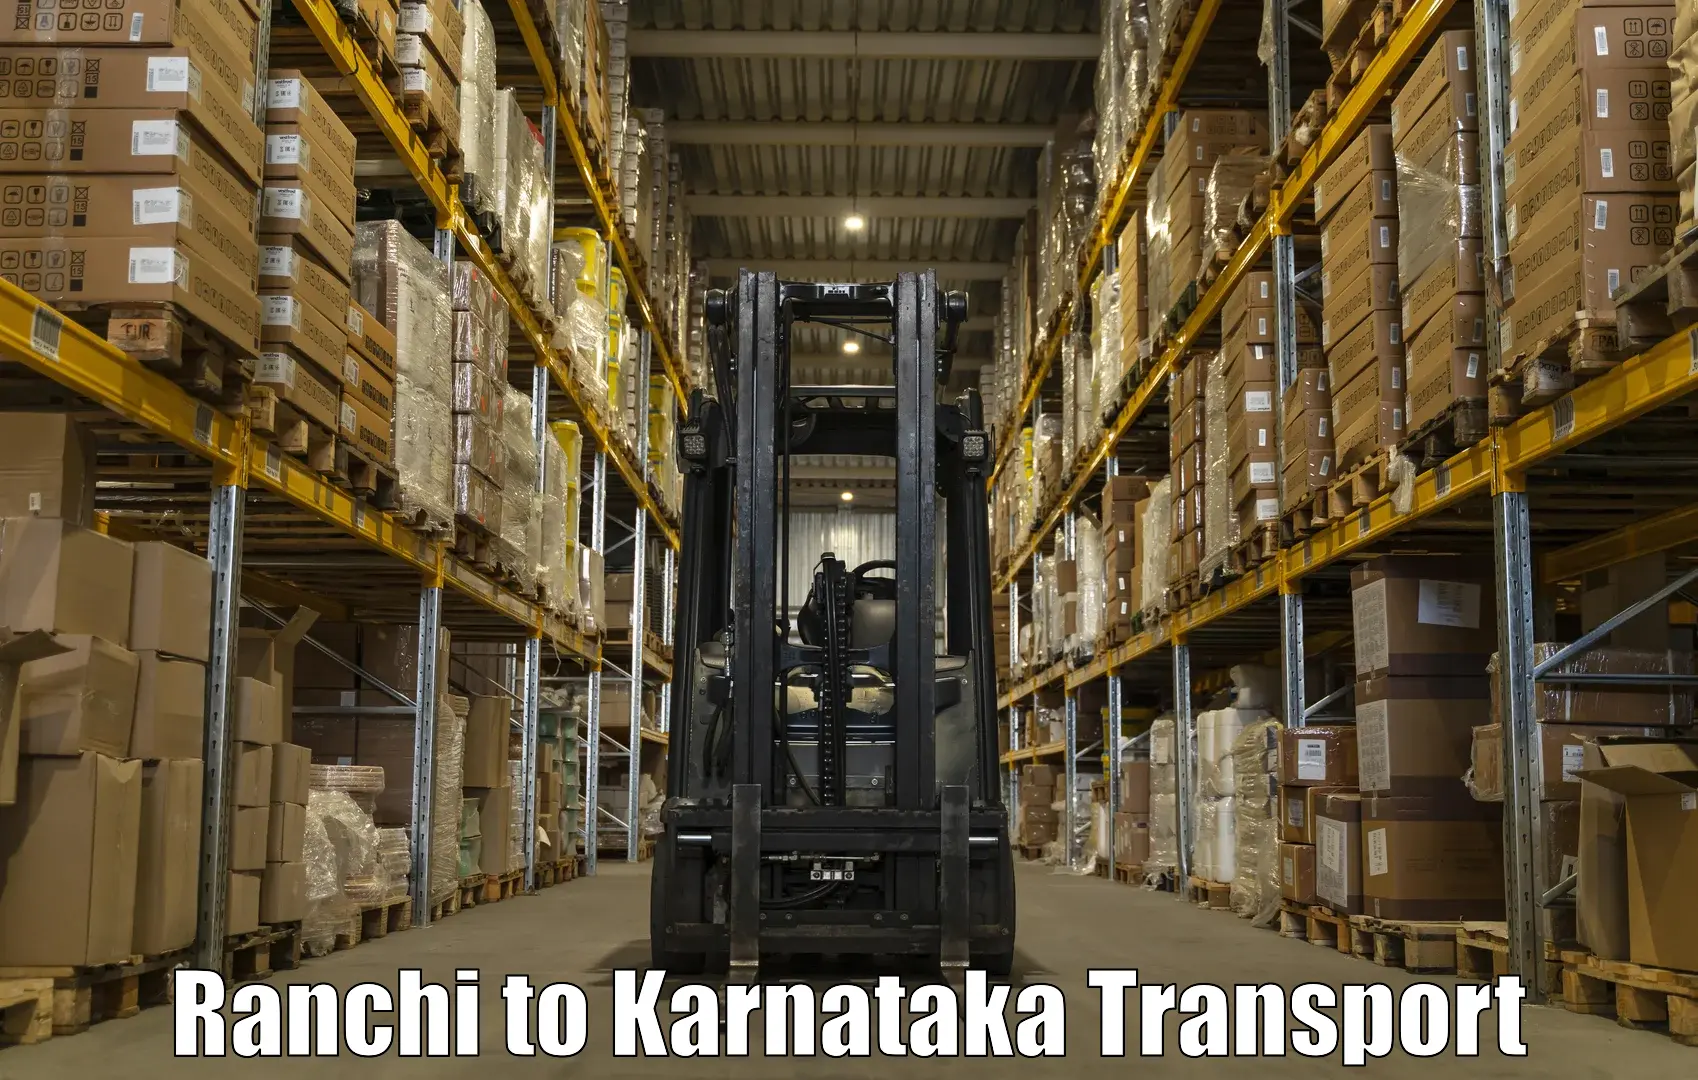 Truck transport companies in India Ranchi to Ranebennur